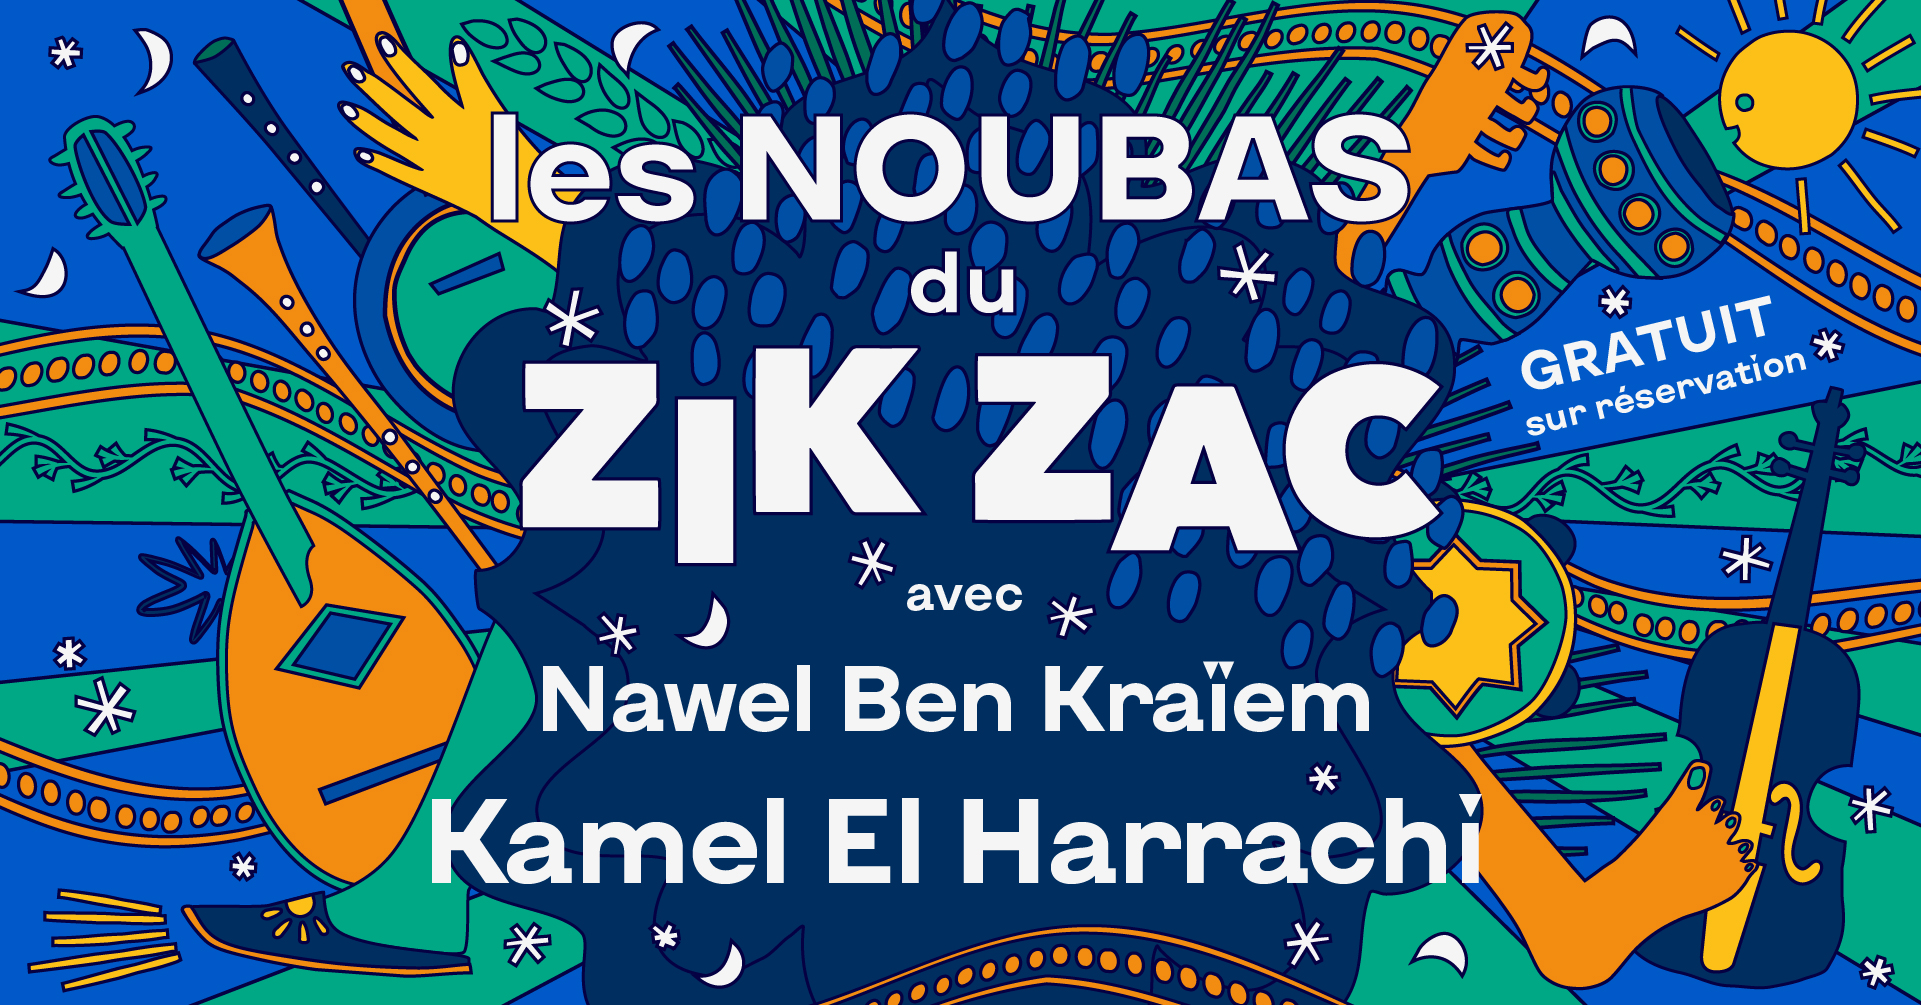 zz-nouba-header-event